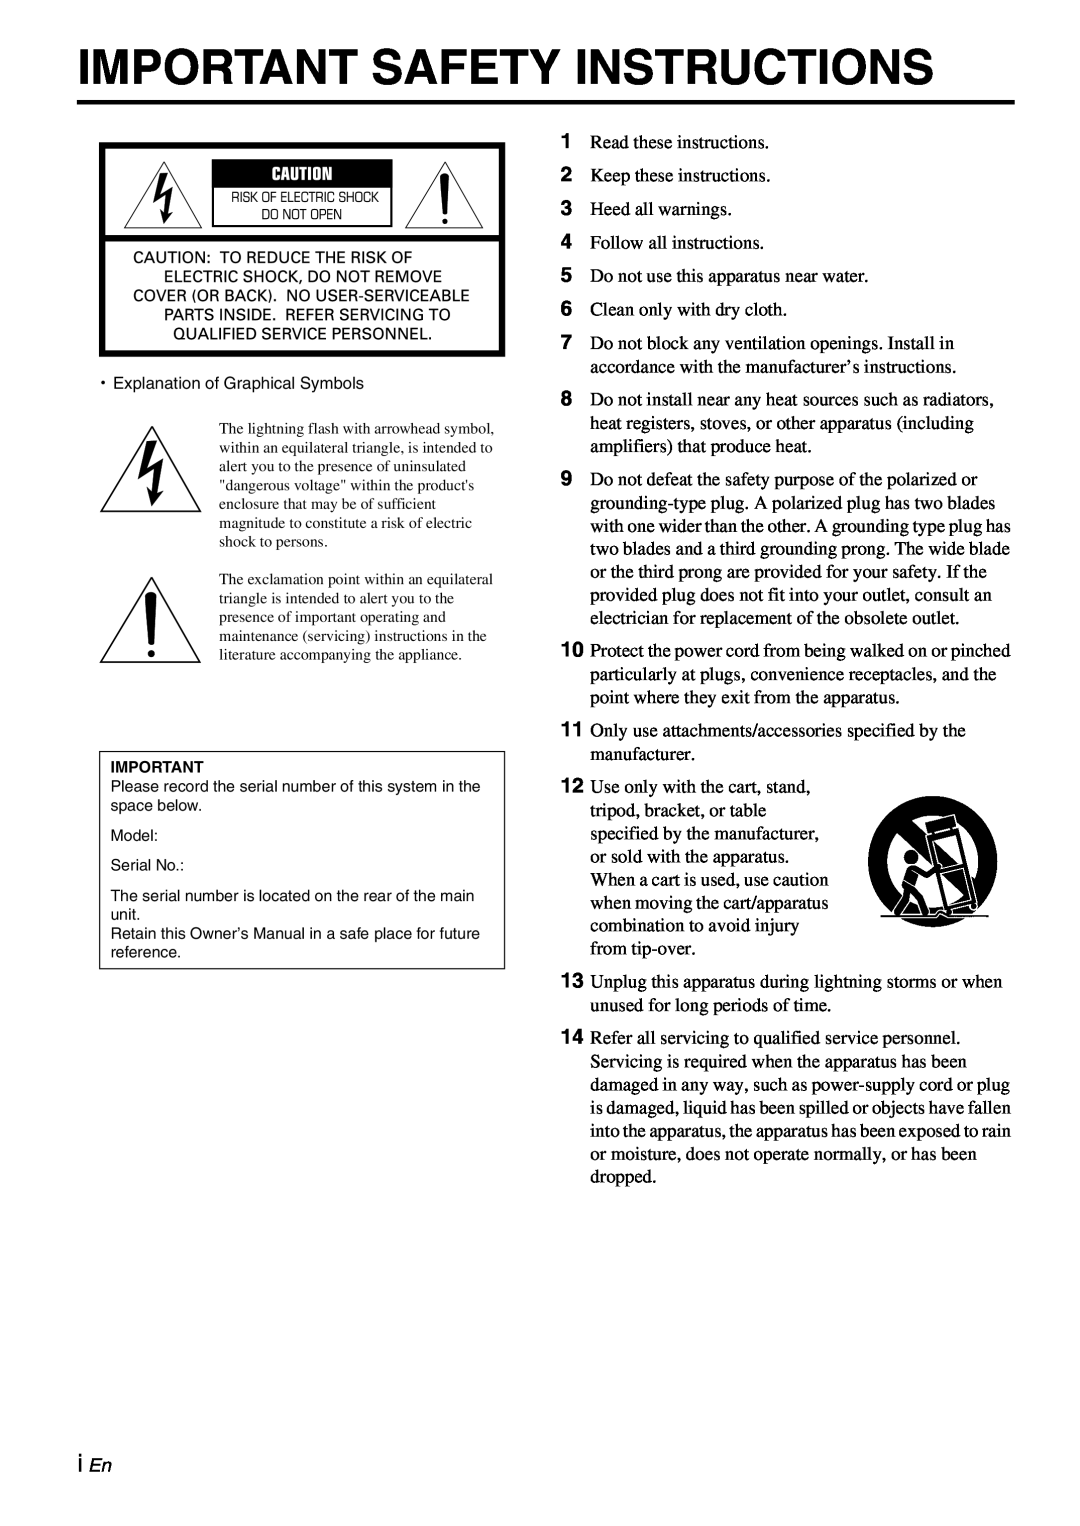 Yamaha NX-U10, Multimedia Speaker owner manual i En, Important Safety Instructions 